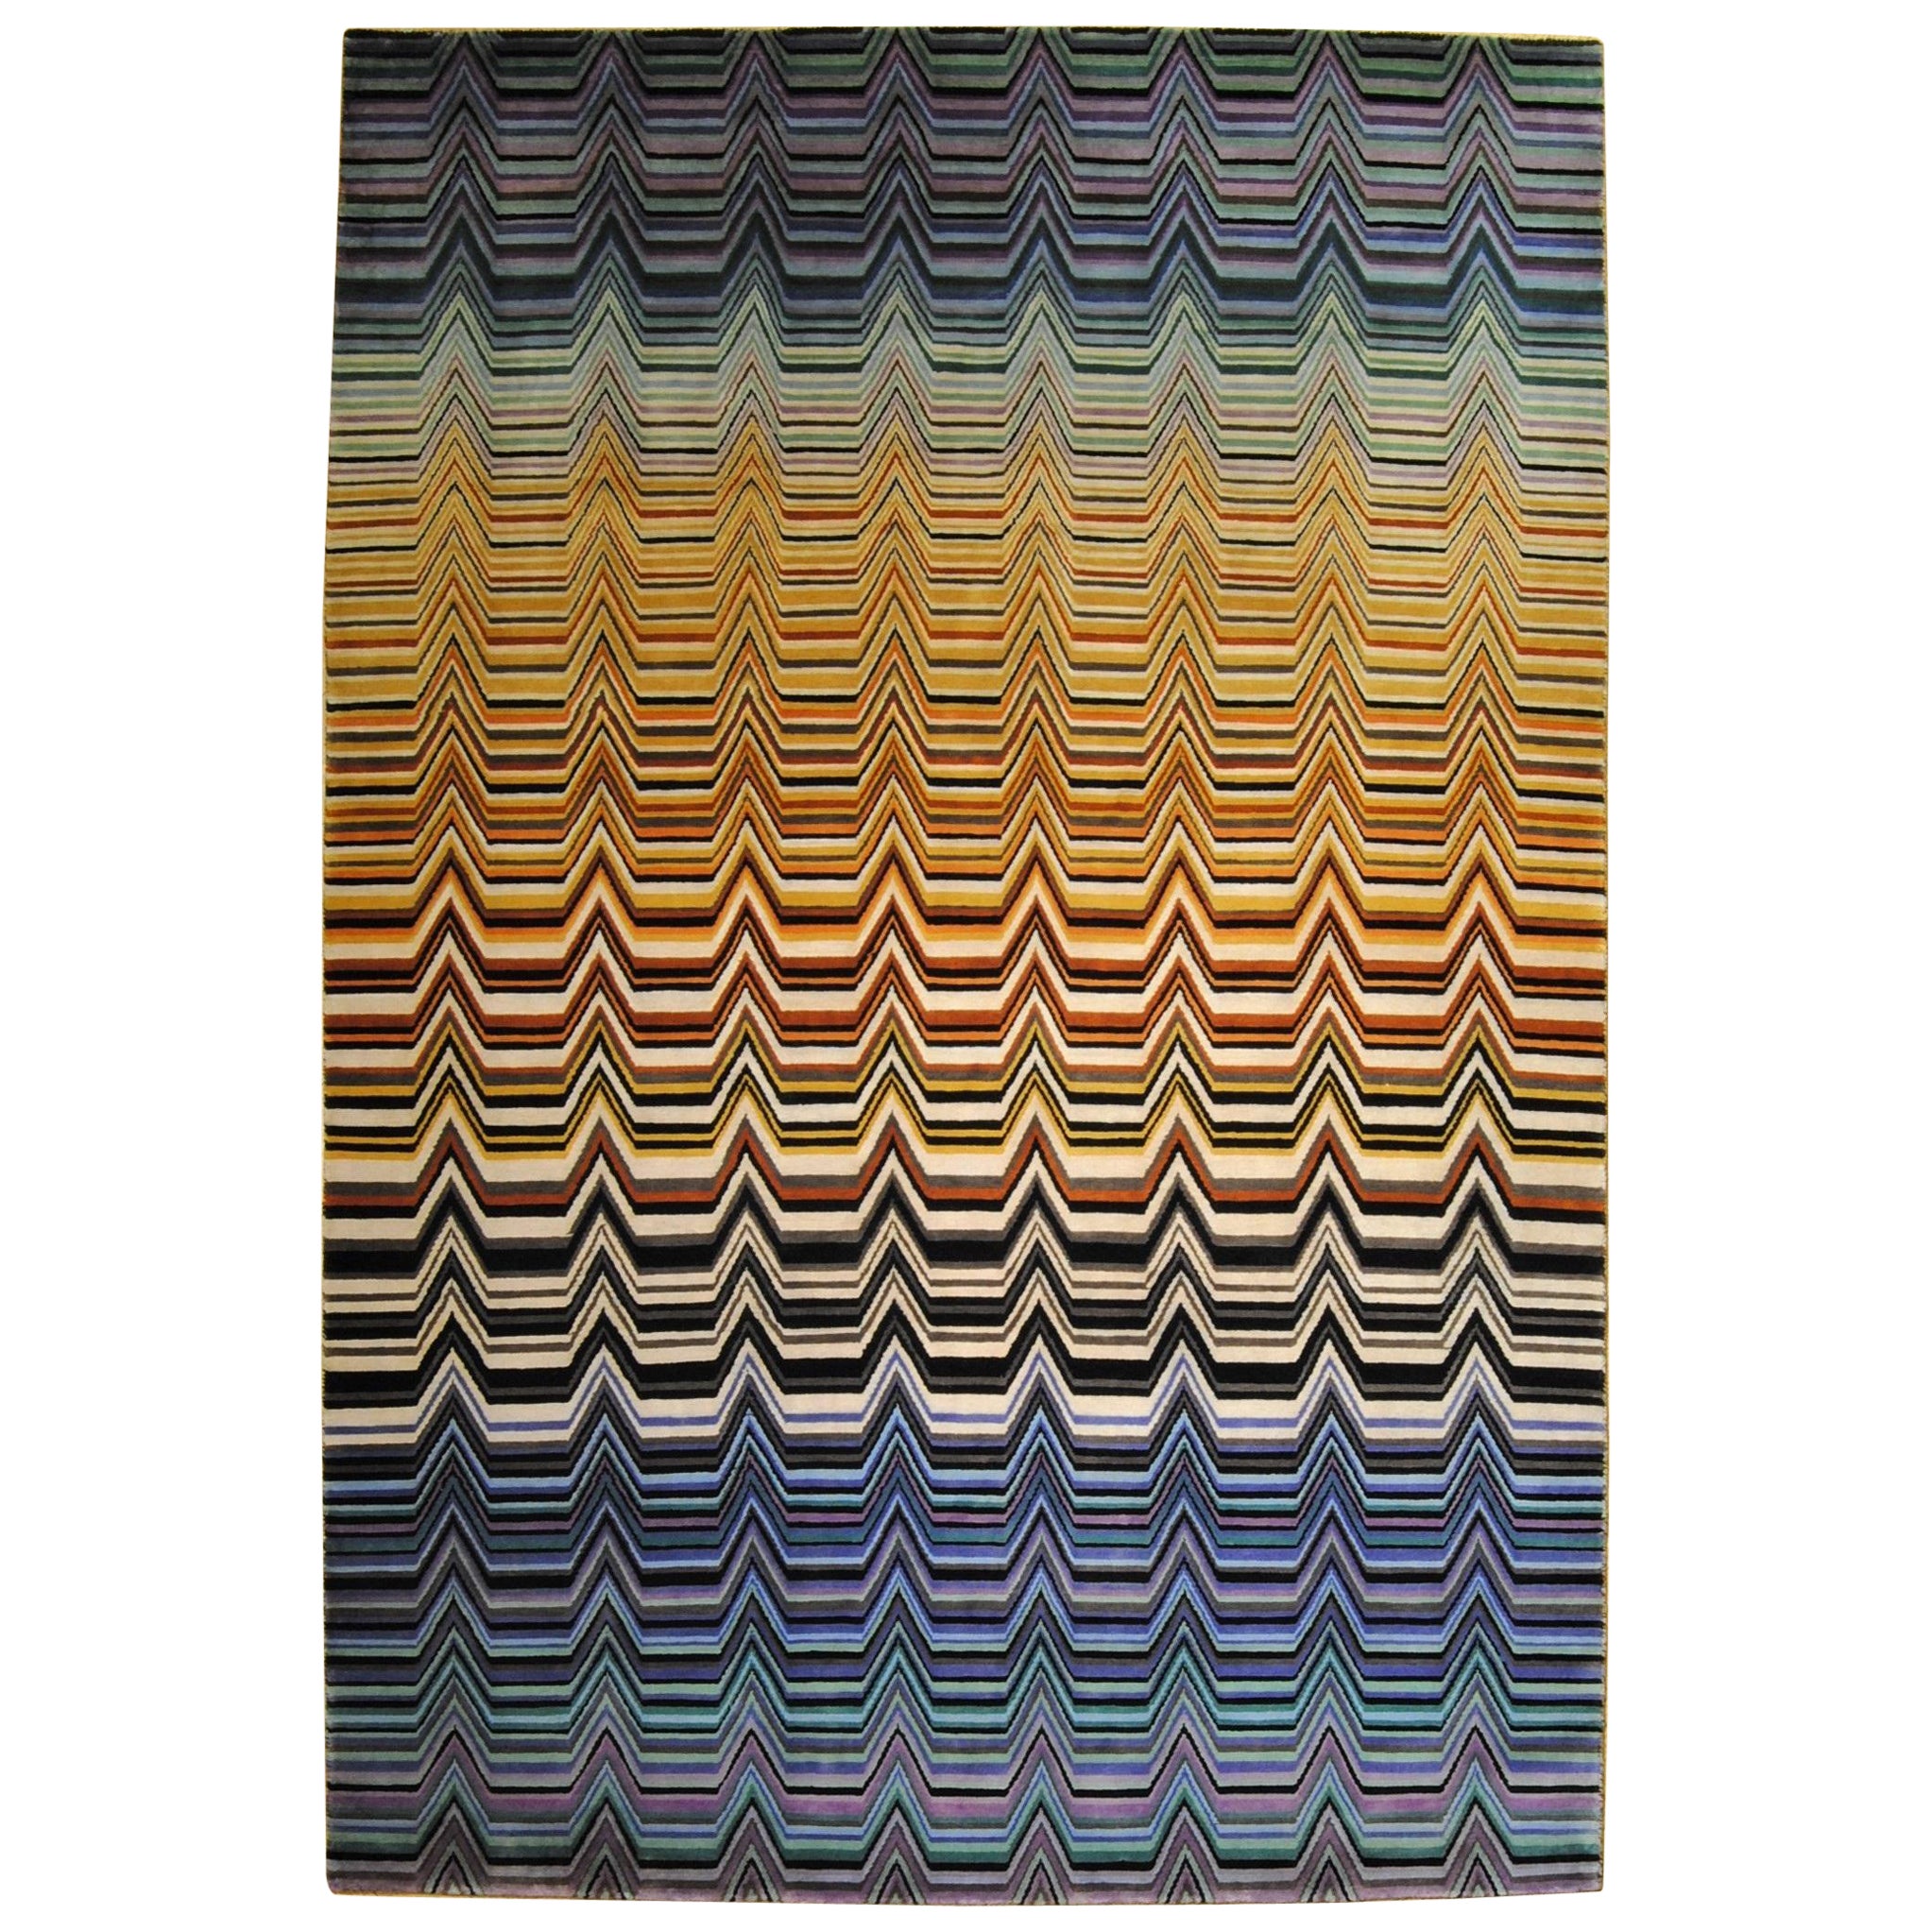 Missoni "Art Collection" Carpet in Geometrical Design